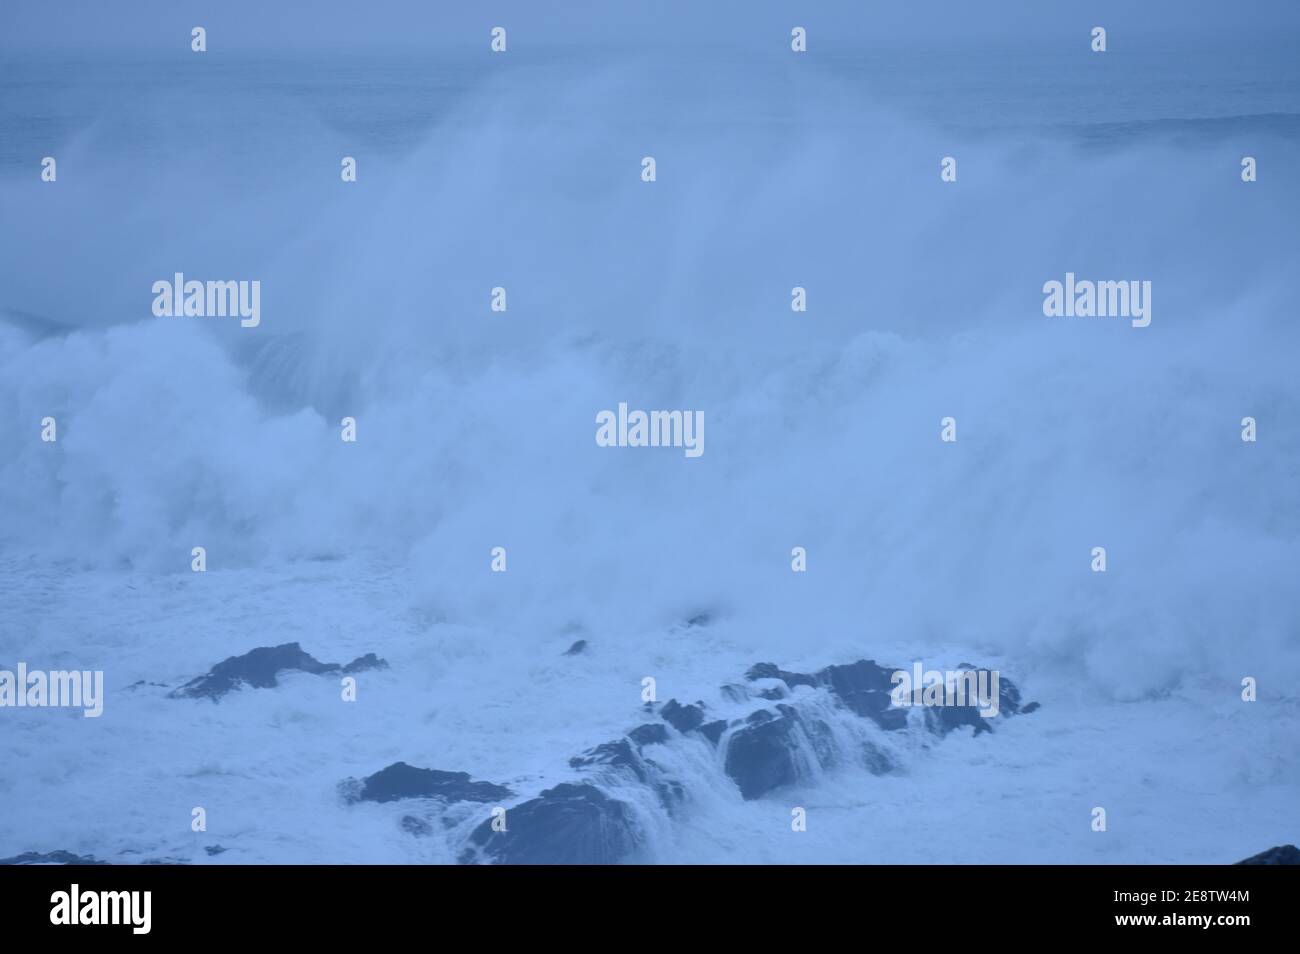 Cribbar wave, Newquay 2021 Stock Photo